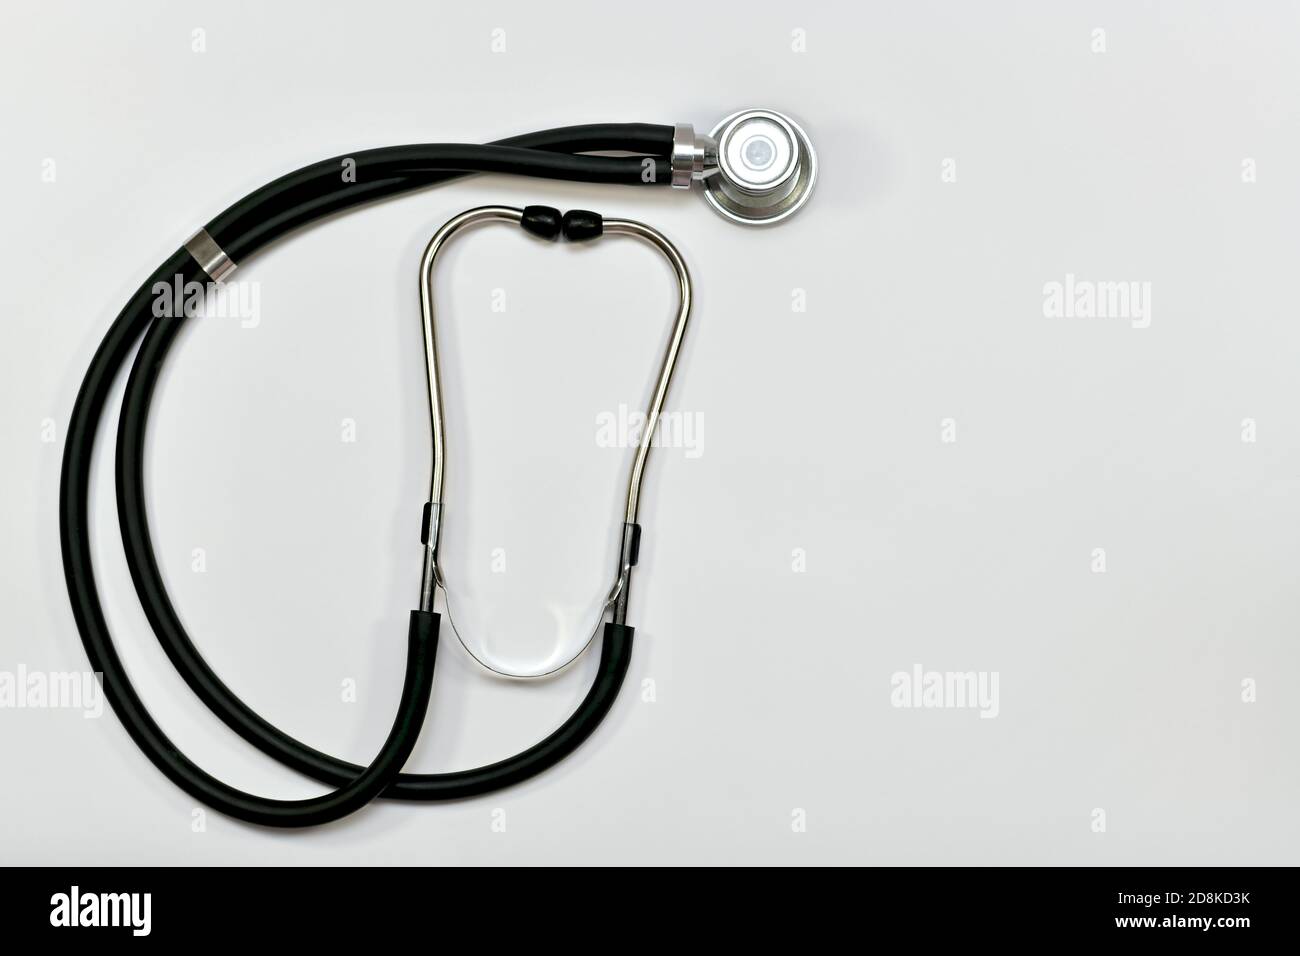 Medical metal stethoscope with acoustic head, binaural tubes, headband and earmolds.  Stock Photo